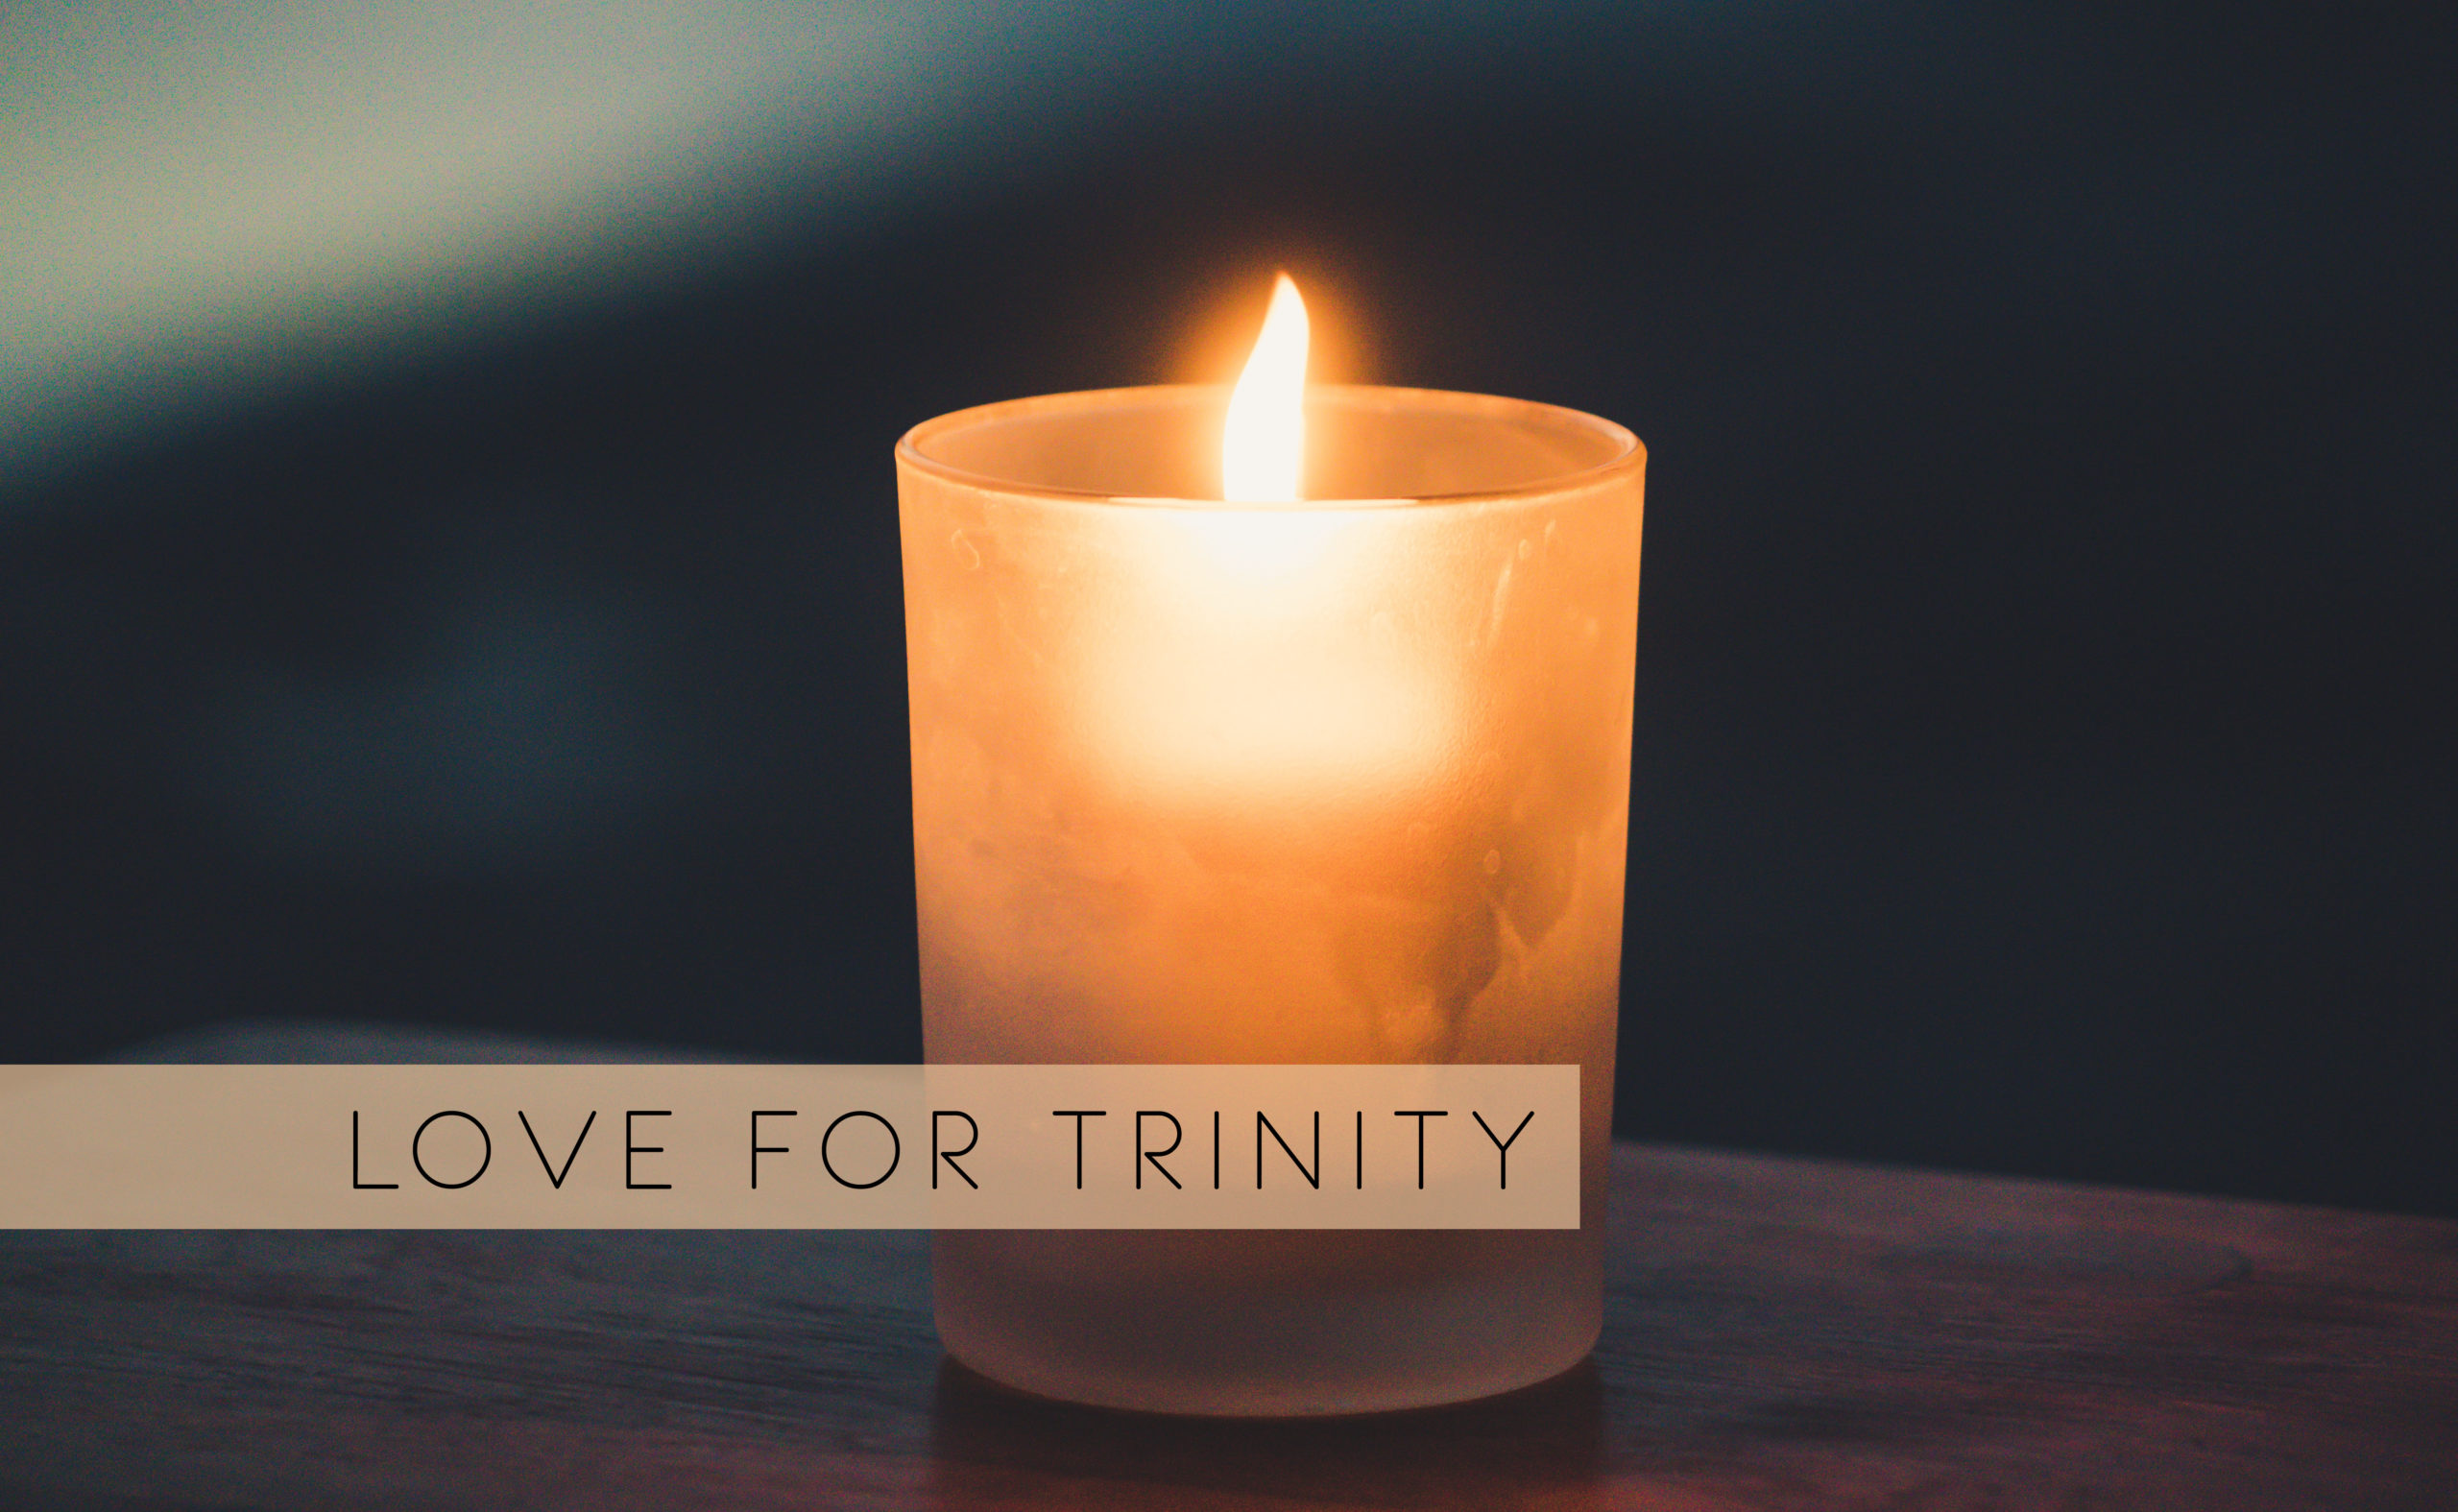 MONDAY: Love for Trinity